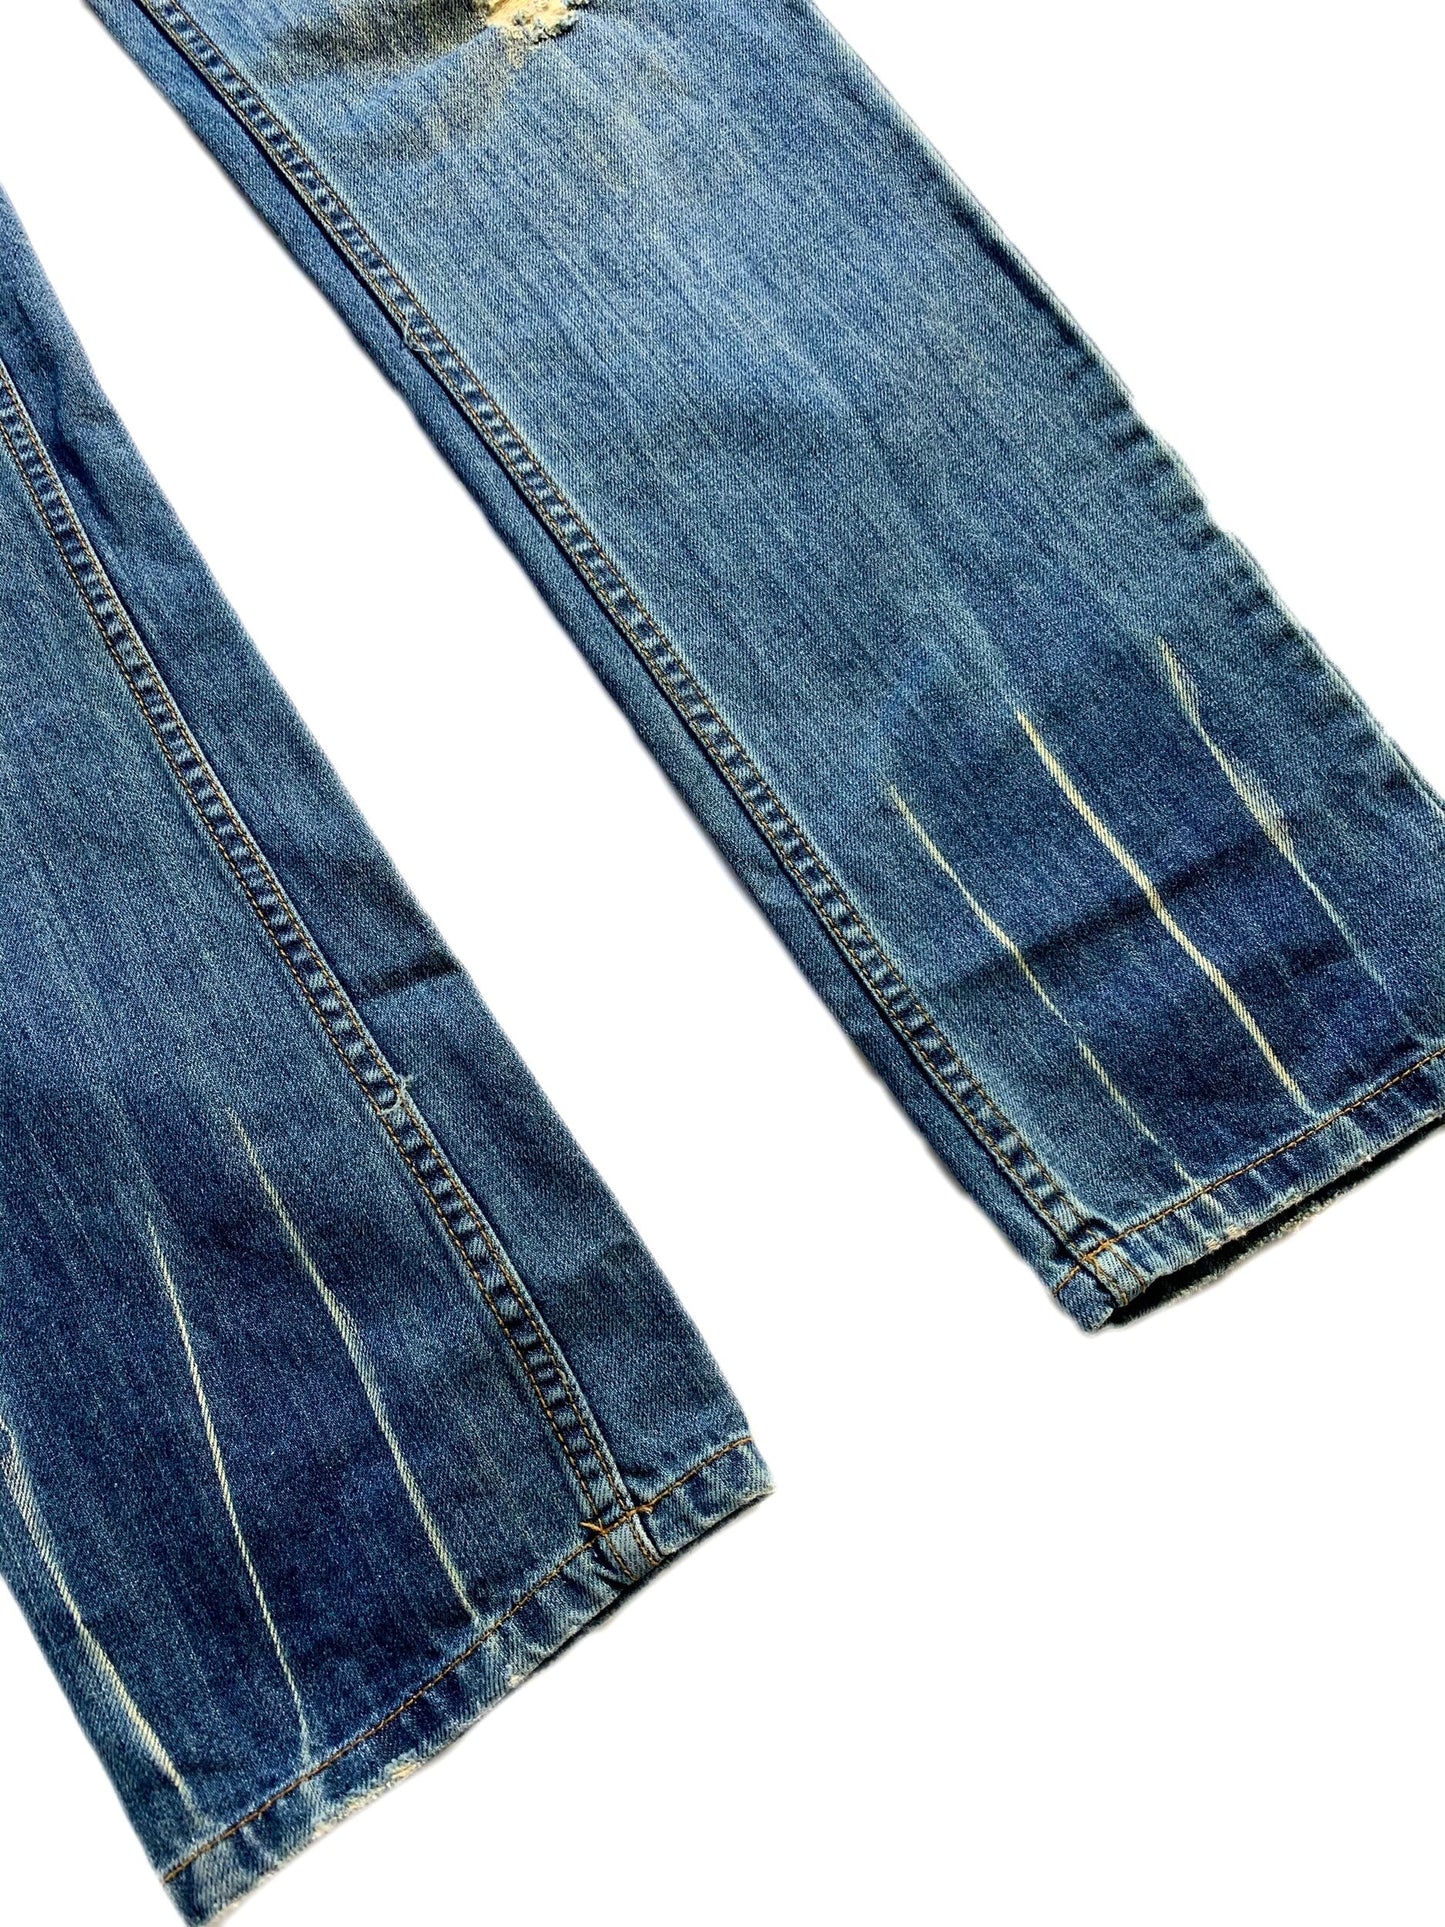 Vintage Dolce & Gabbana Distressed Jeans